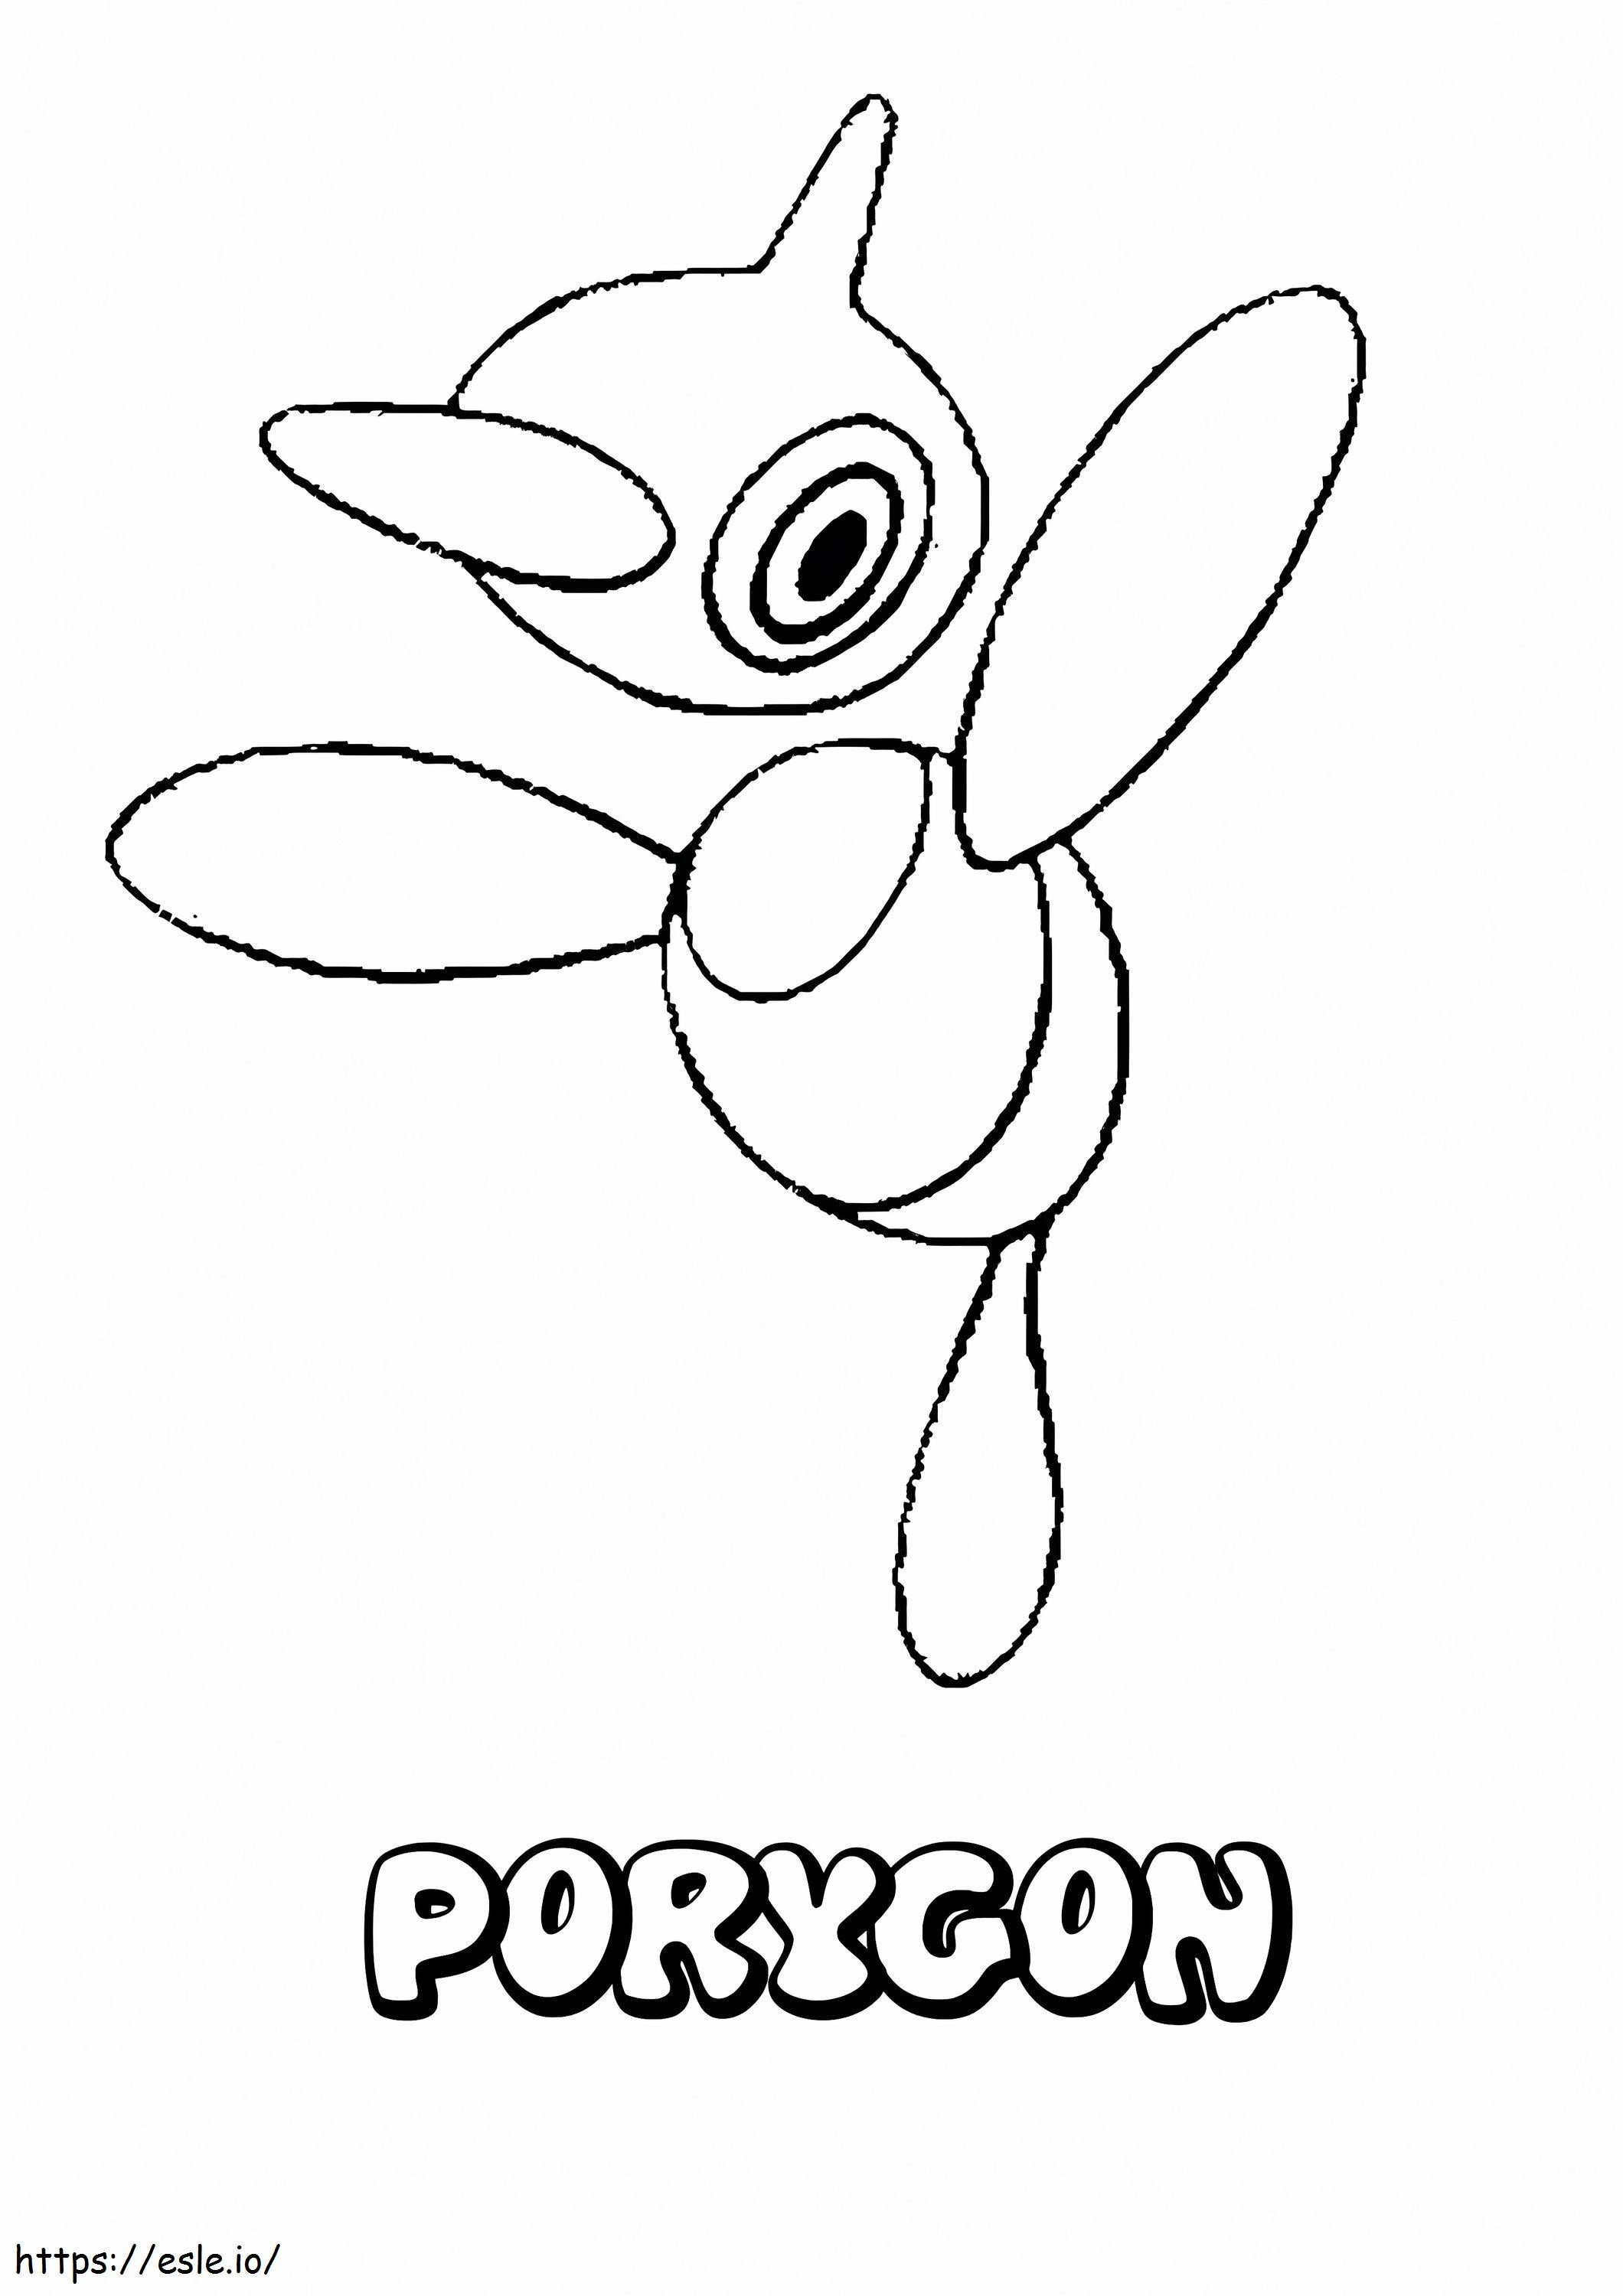 Porygon Z Gen 4 Pokémon ausmalbilder